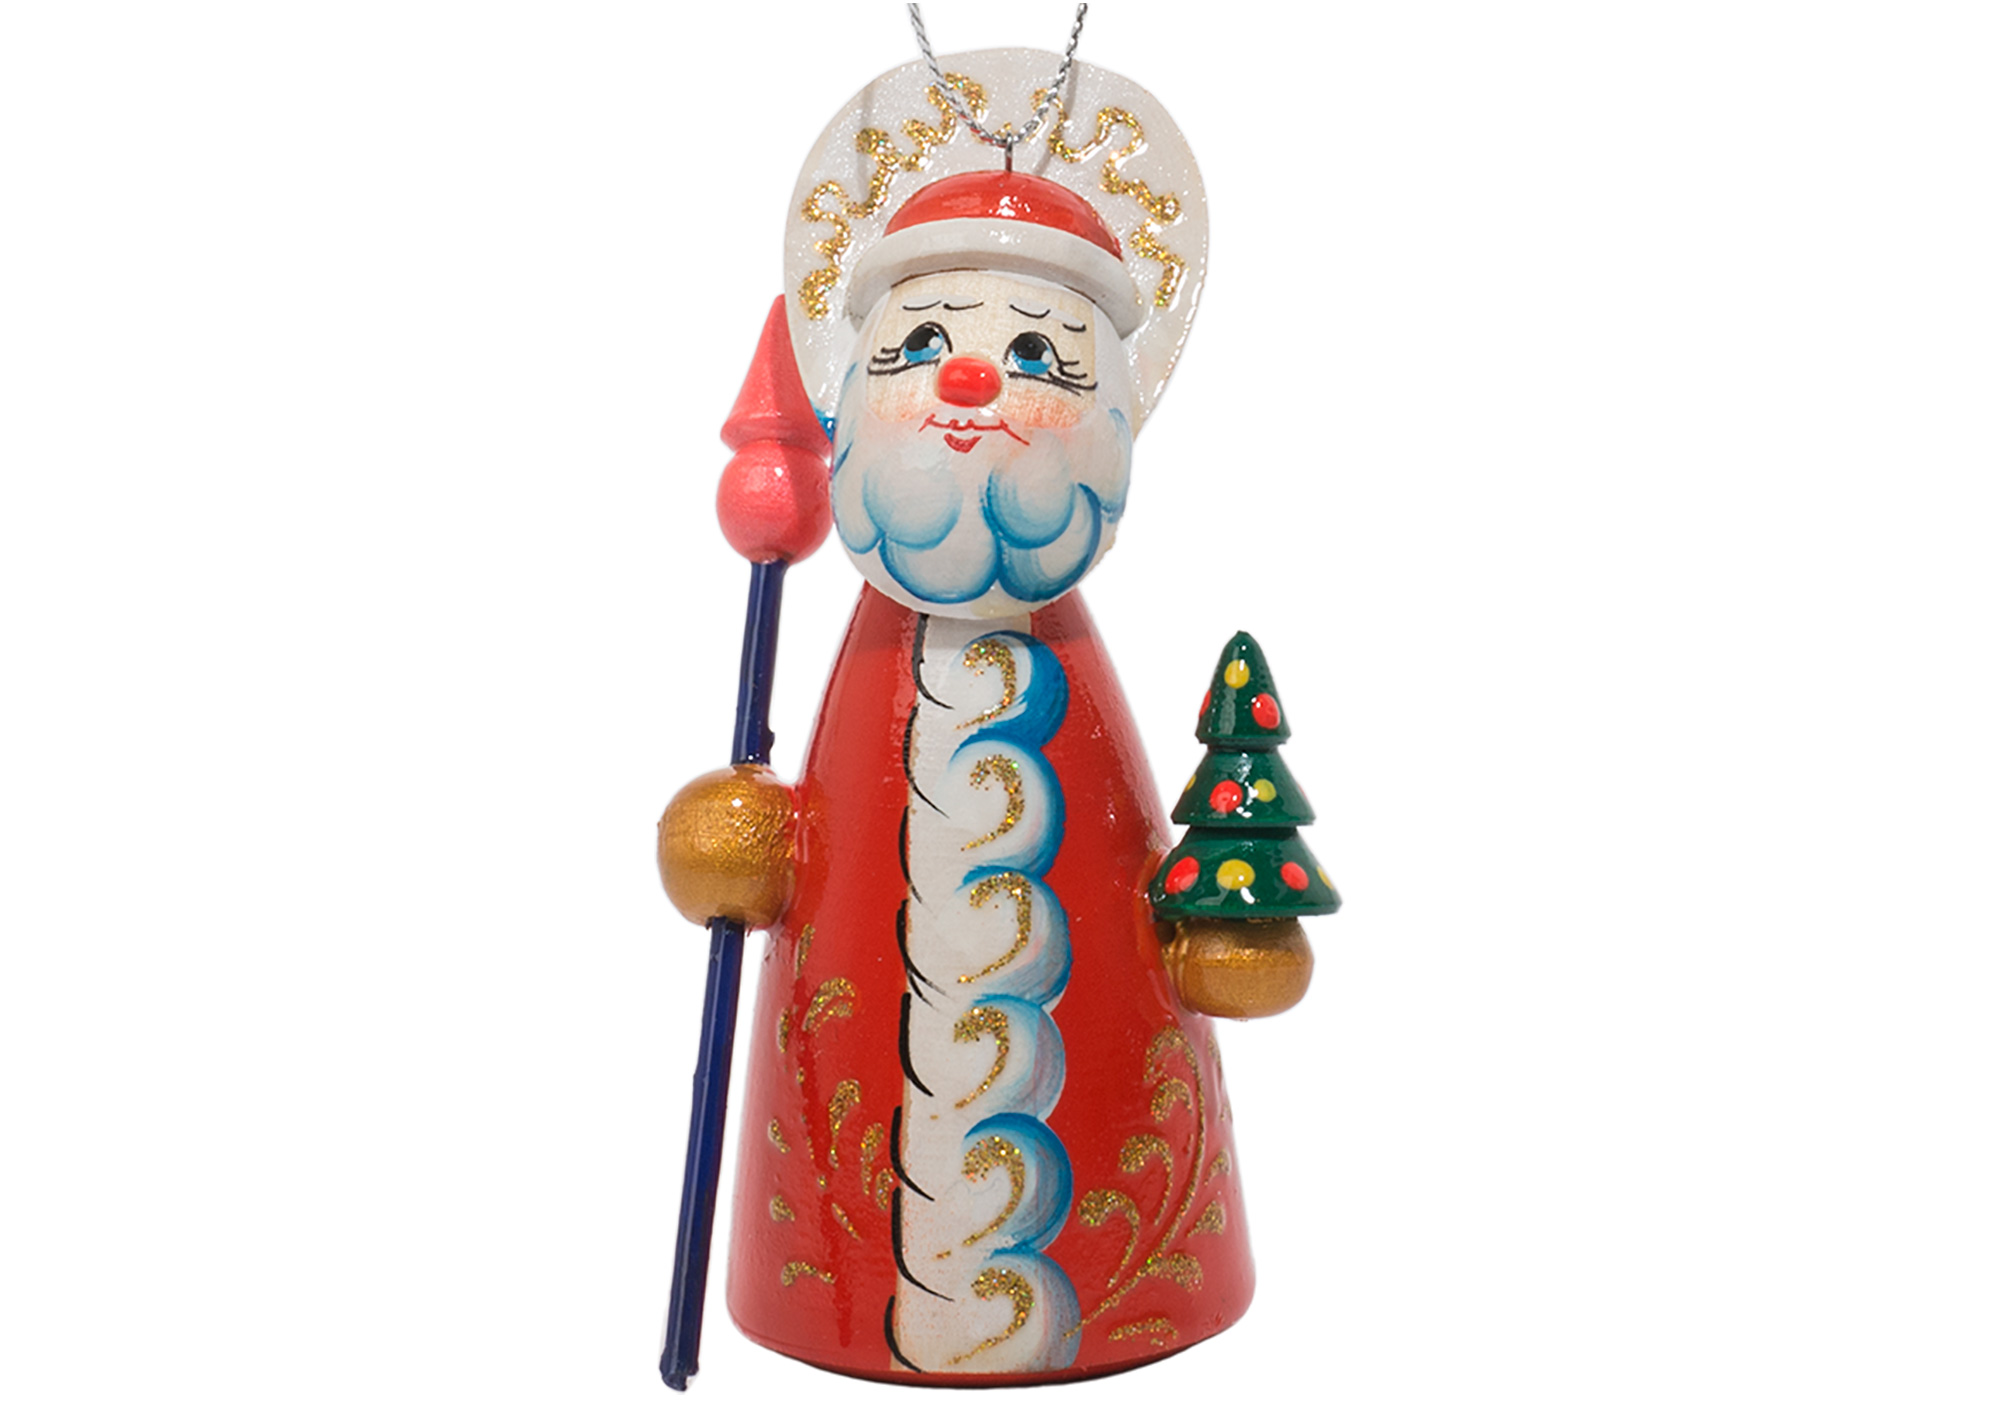 Buy Folksy Father Frost Ornament 4" at GoldenCockerel.com